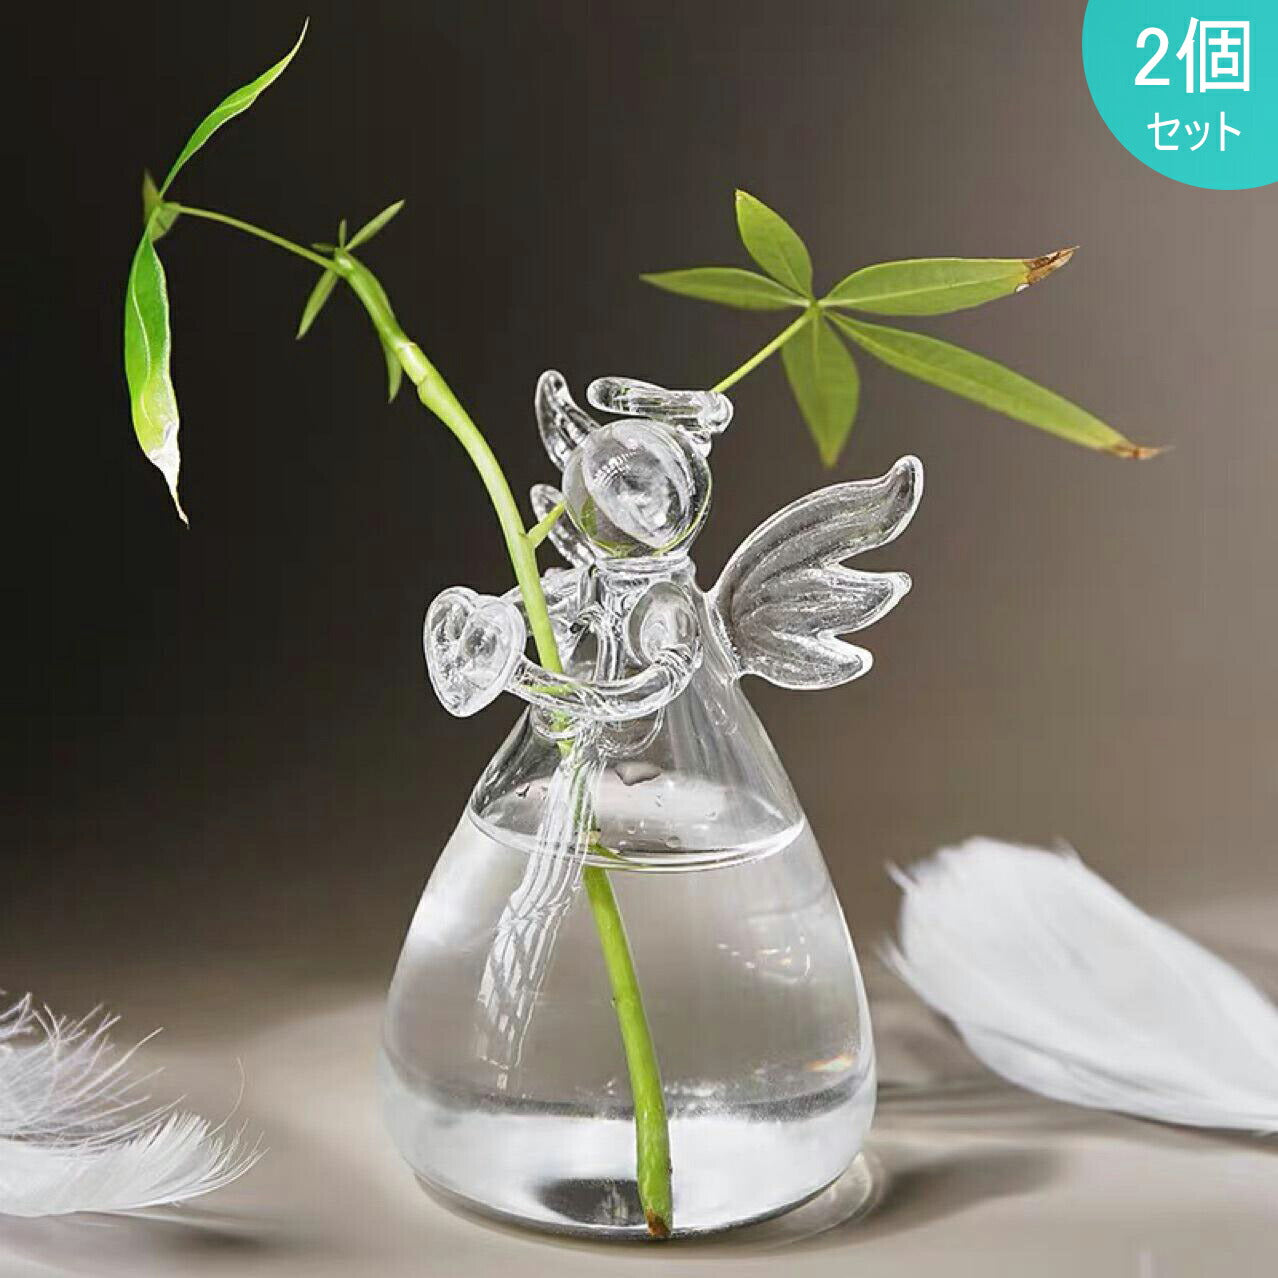 IwaiLoft 部屋に置くだけで、周囲が優しい雰囲気に 手作り 花瓶 ガラス ガラス花瓶 花器 一輪挿し フラワーベース ミニ 小 インテ –  茶器・コーヒー用品を選ぶ - IwaiLoft